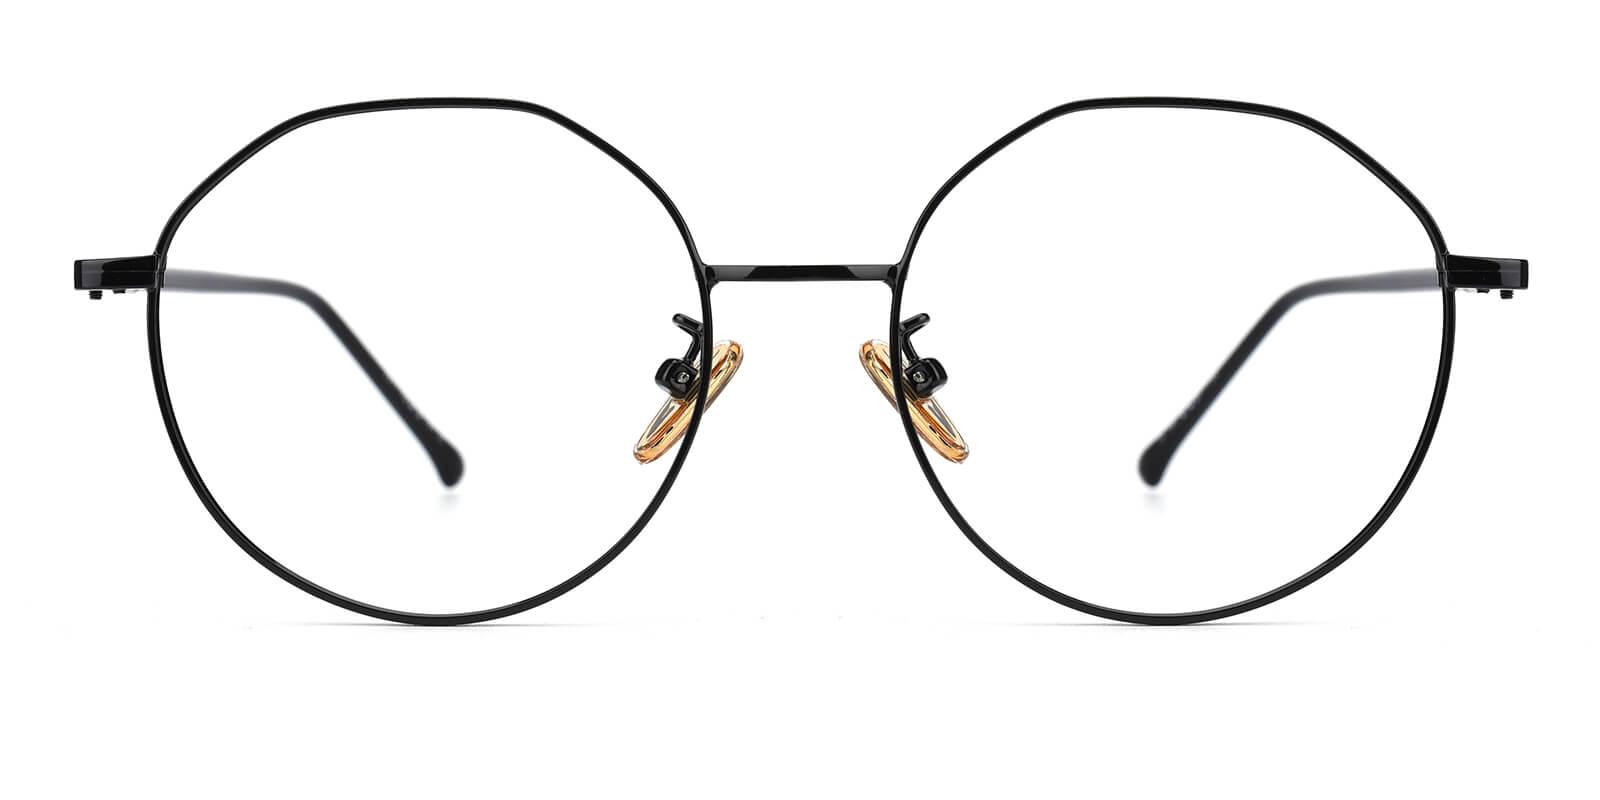 Clarker-Black-Geometric / Round-Metal-Eyeglasses-detail